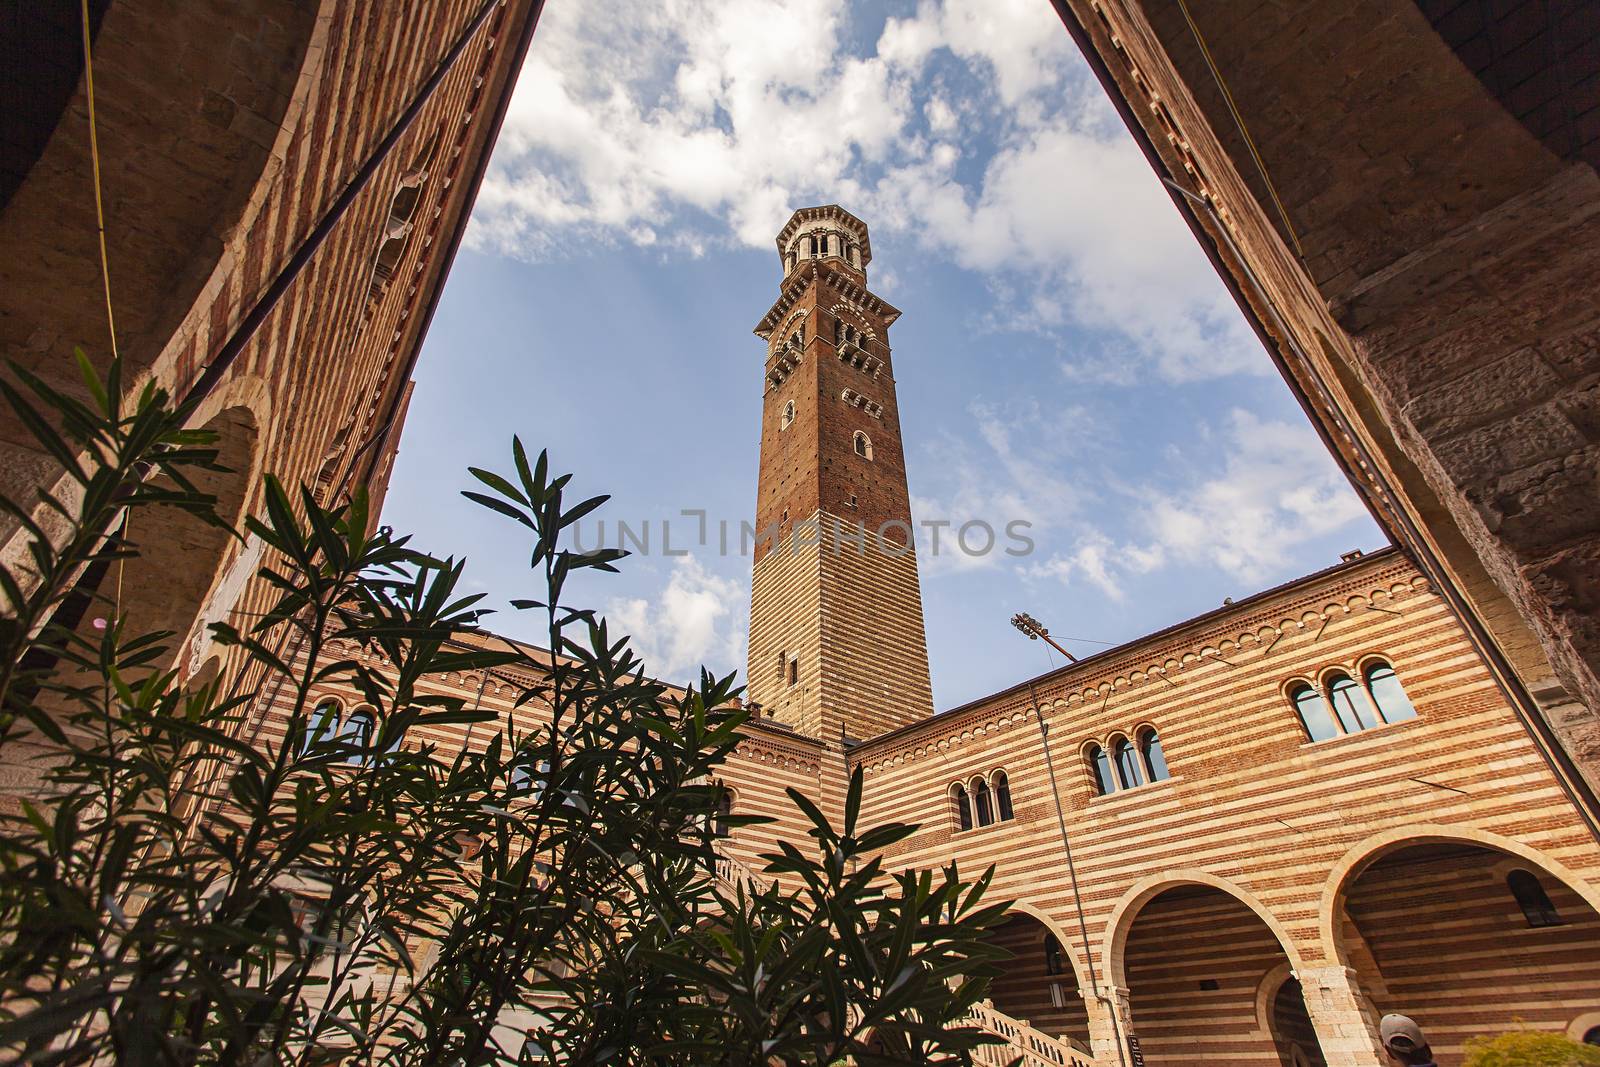 Lamberti tower seen from Piazza dei Signori in Verona in Italy